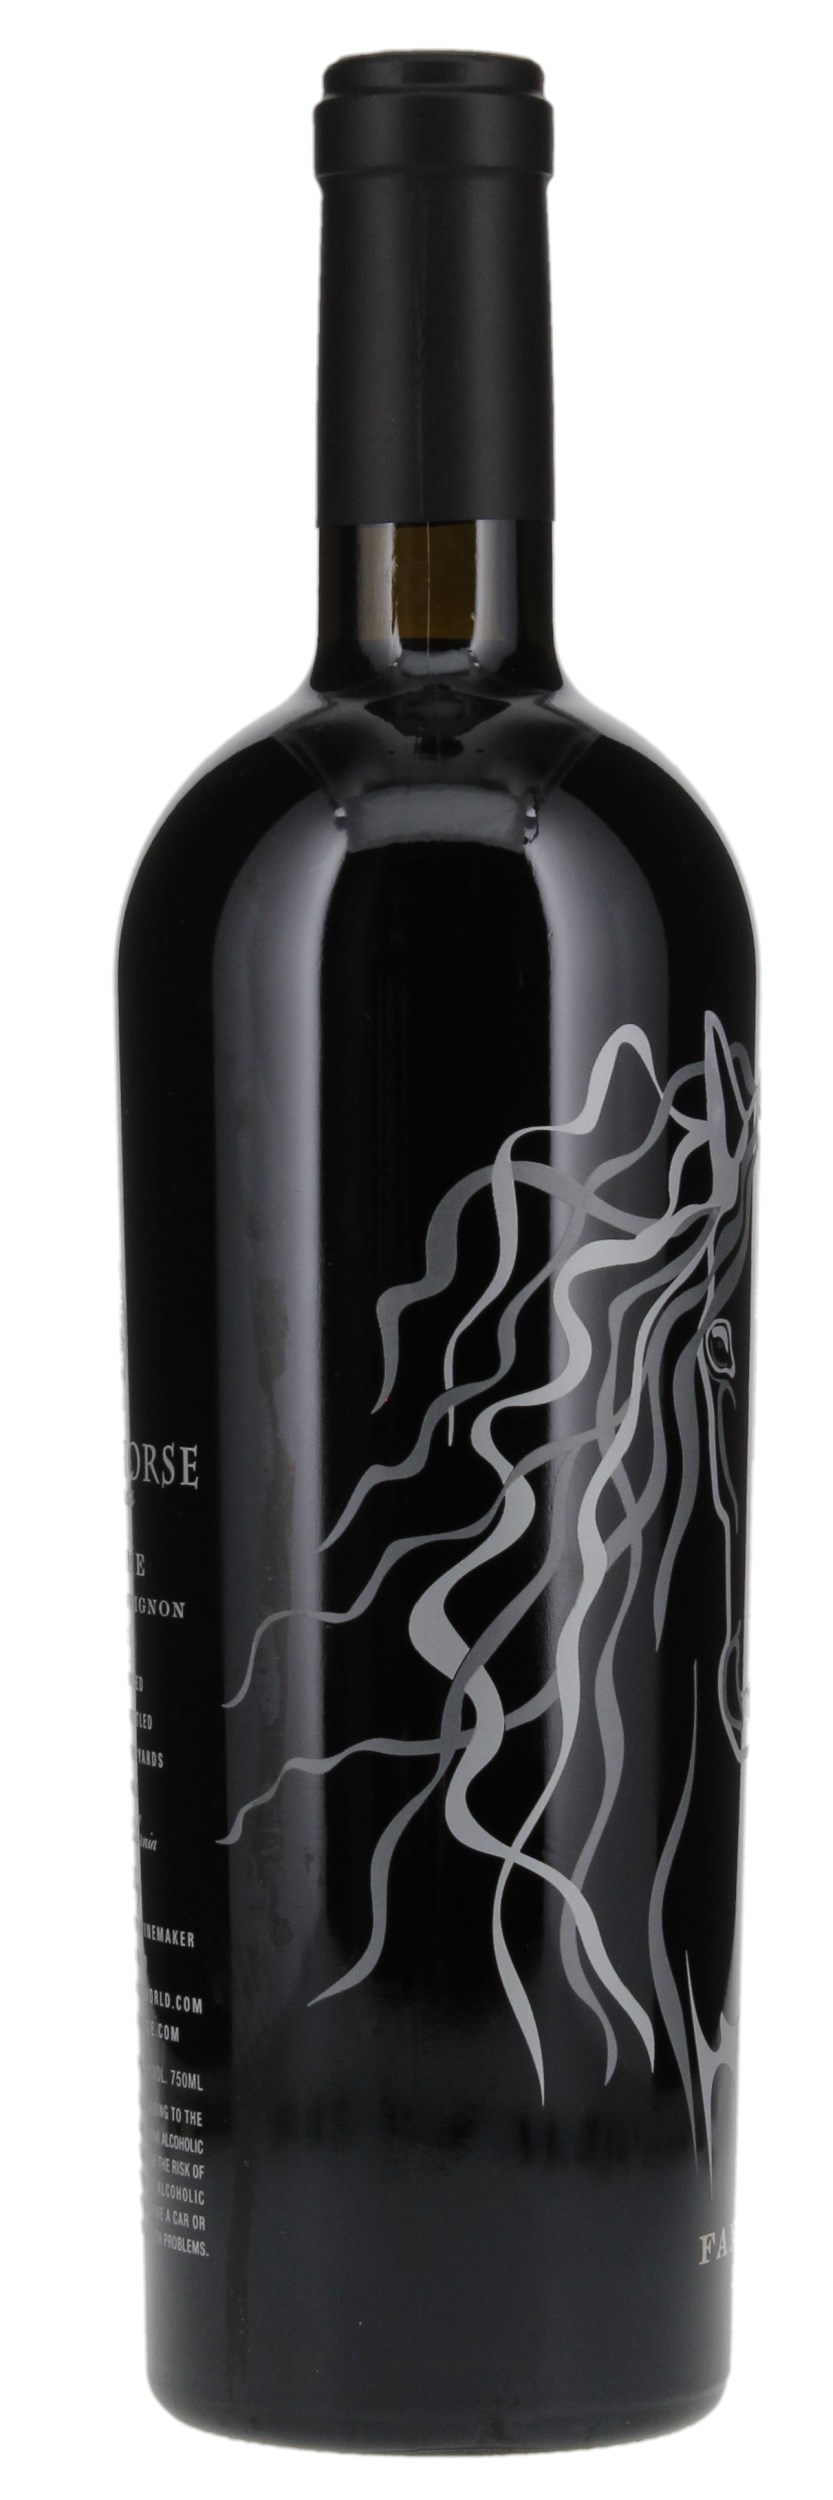 2015 Ghost Horse Vineyard Fantome Cabernet Sauvignon, 750ml